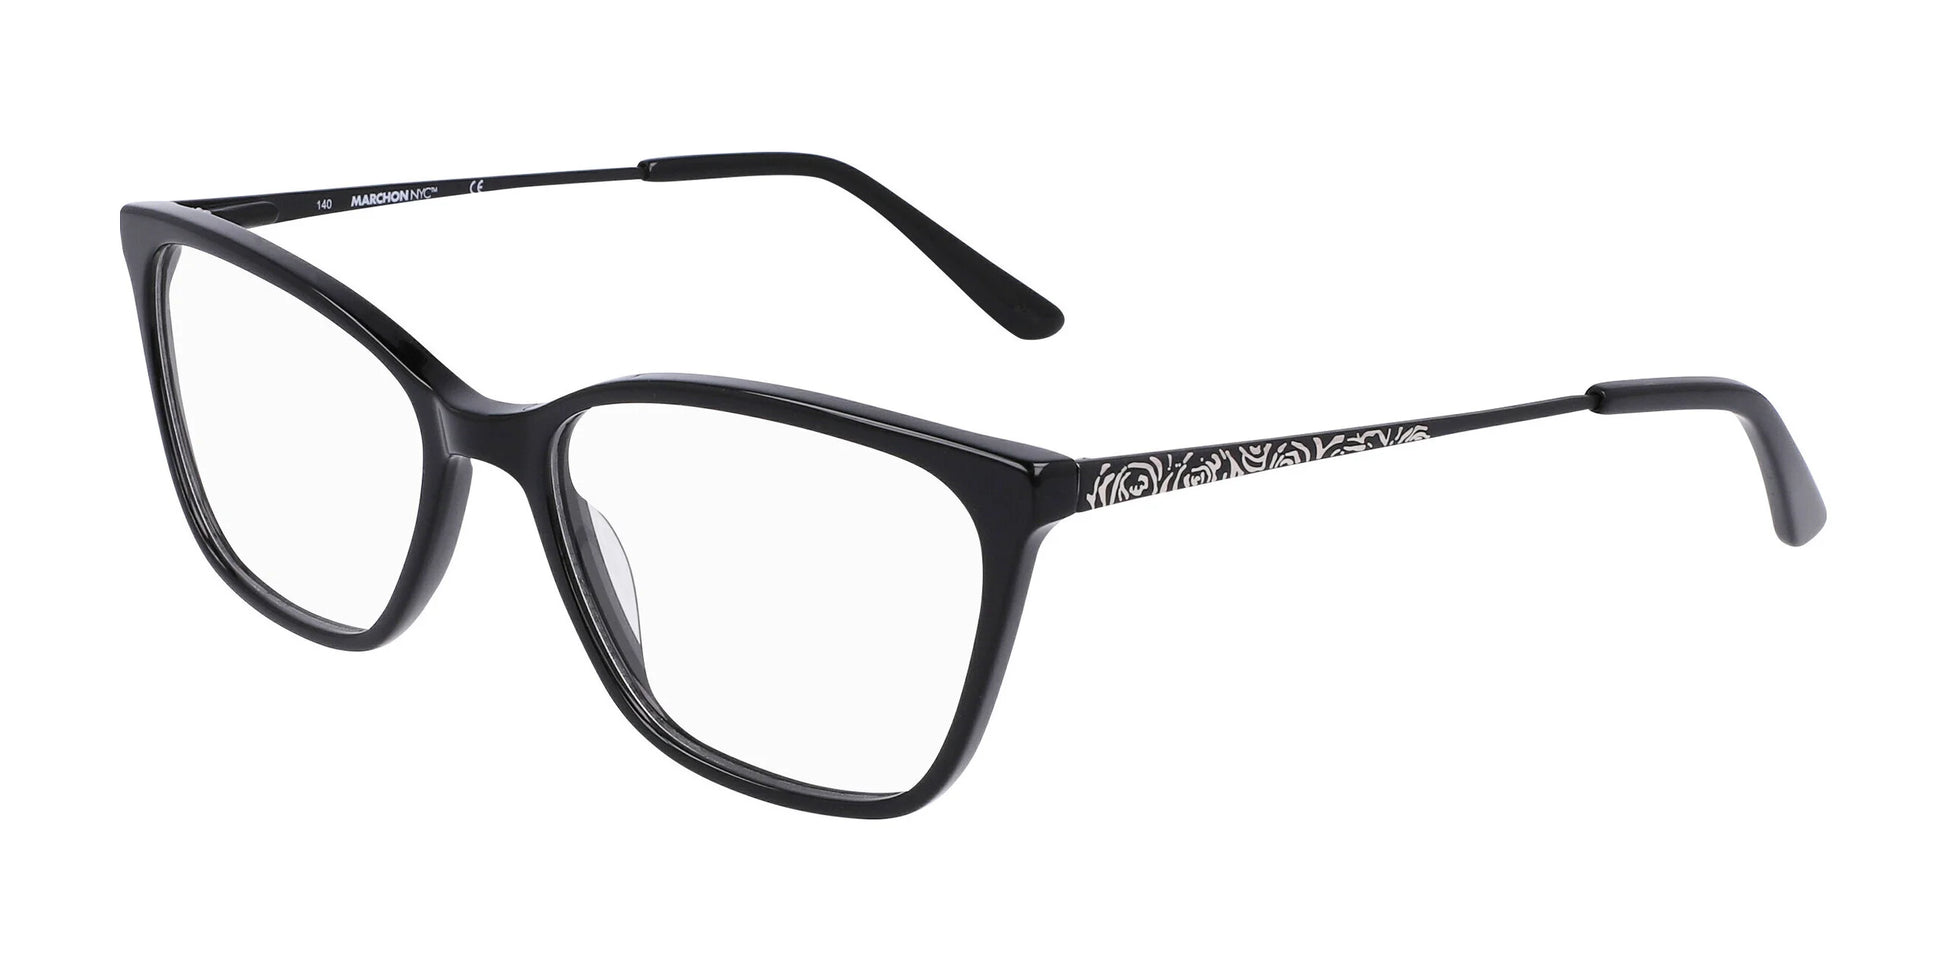 Marchon NYC 5017 Eyeglasses Black